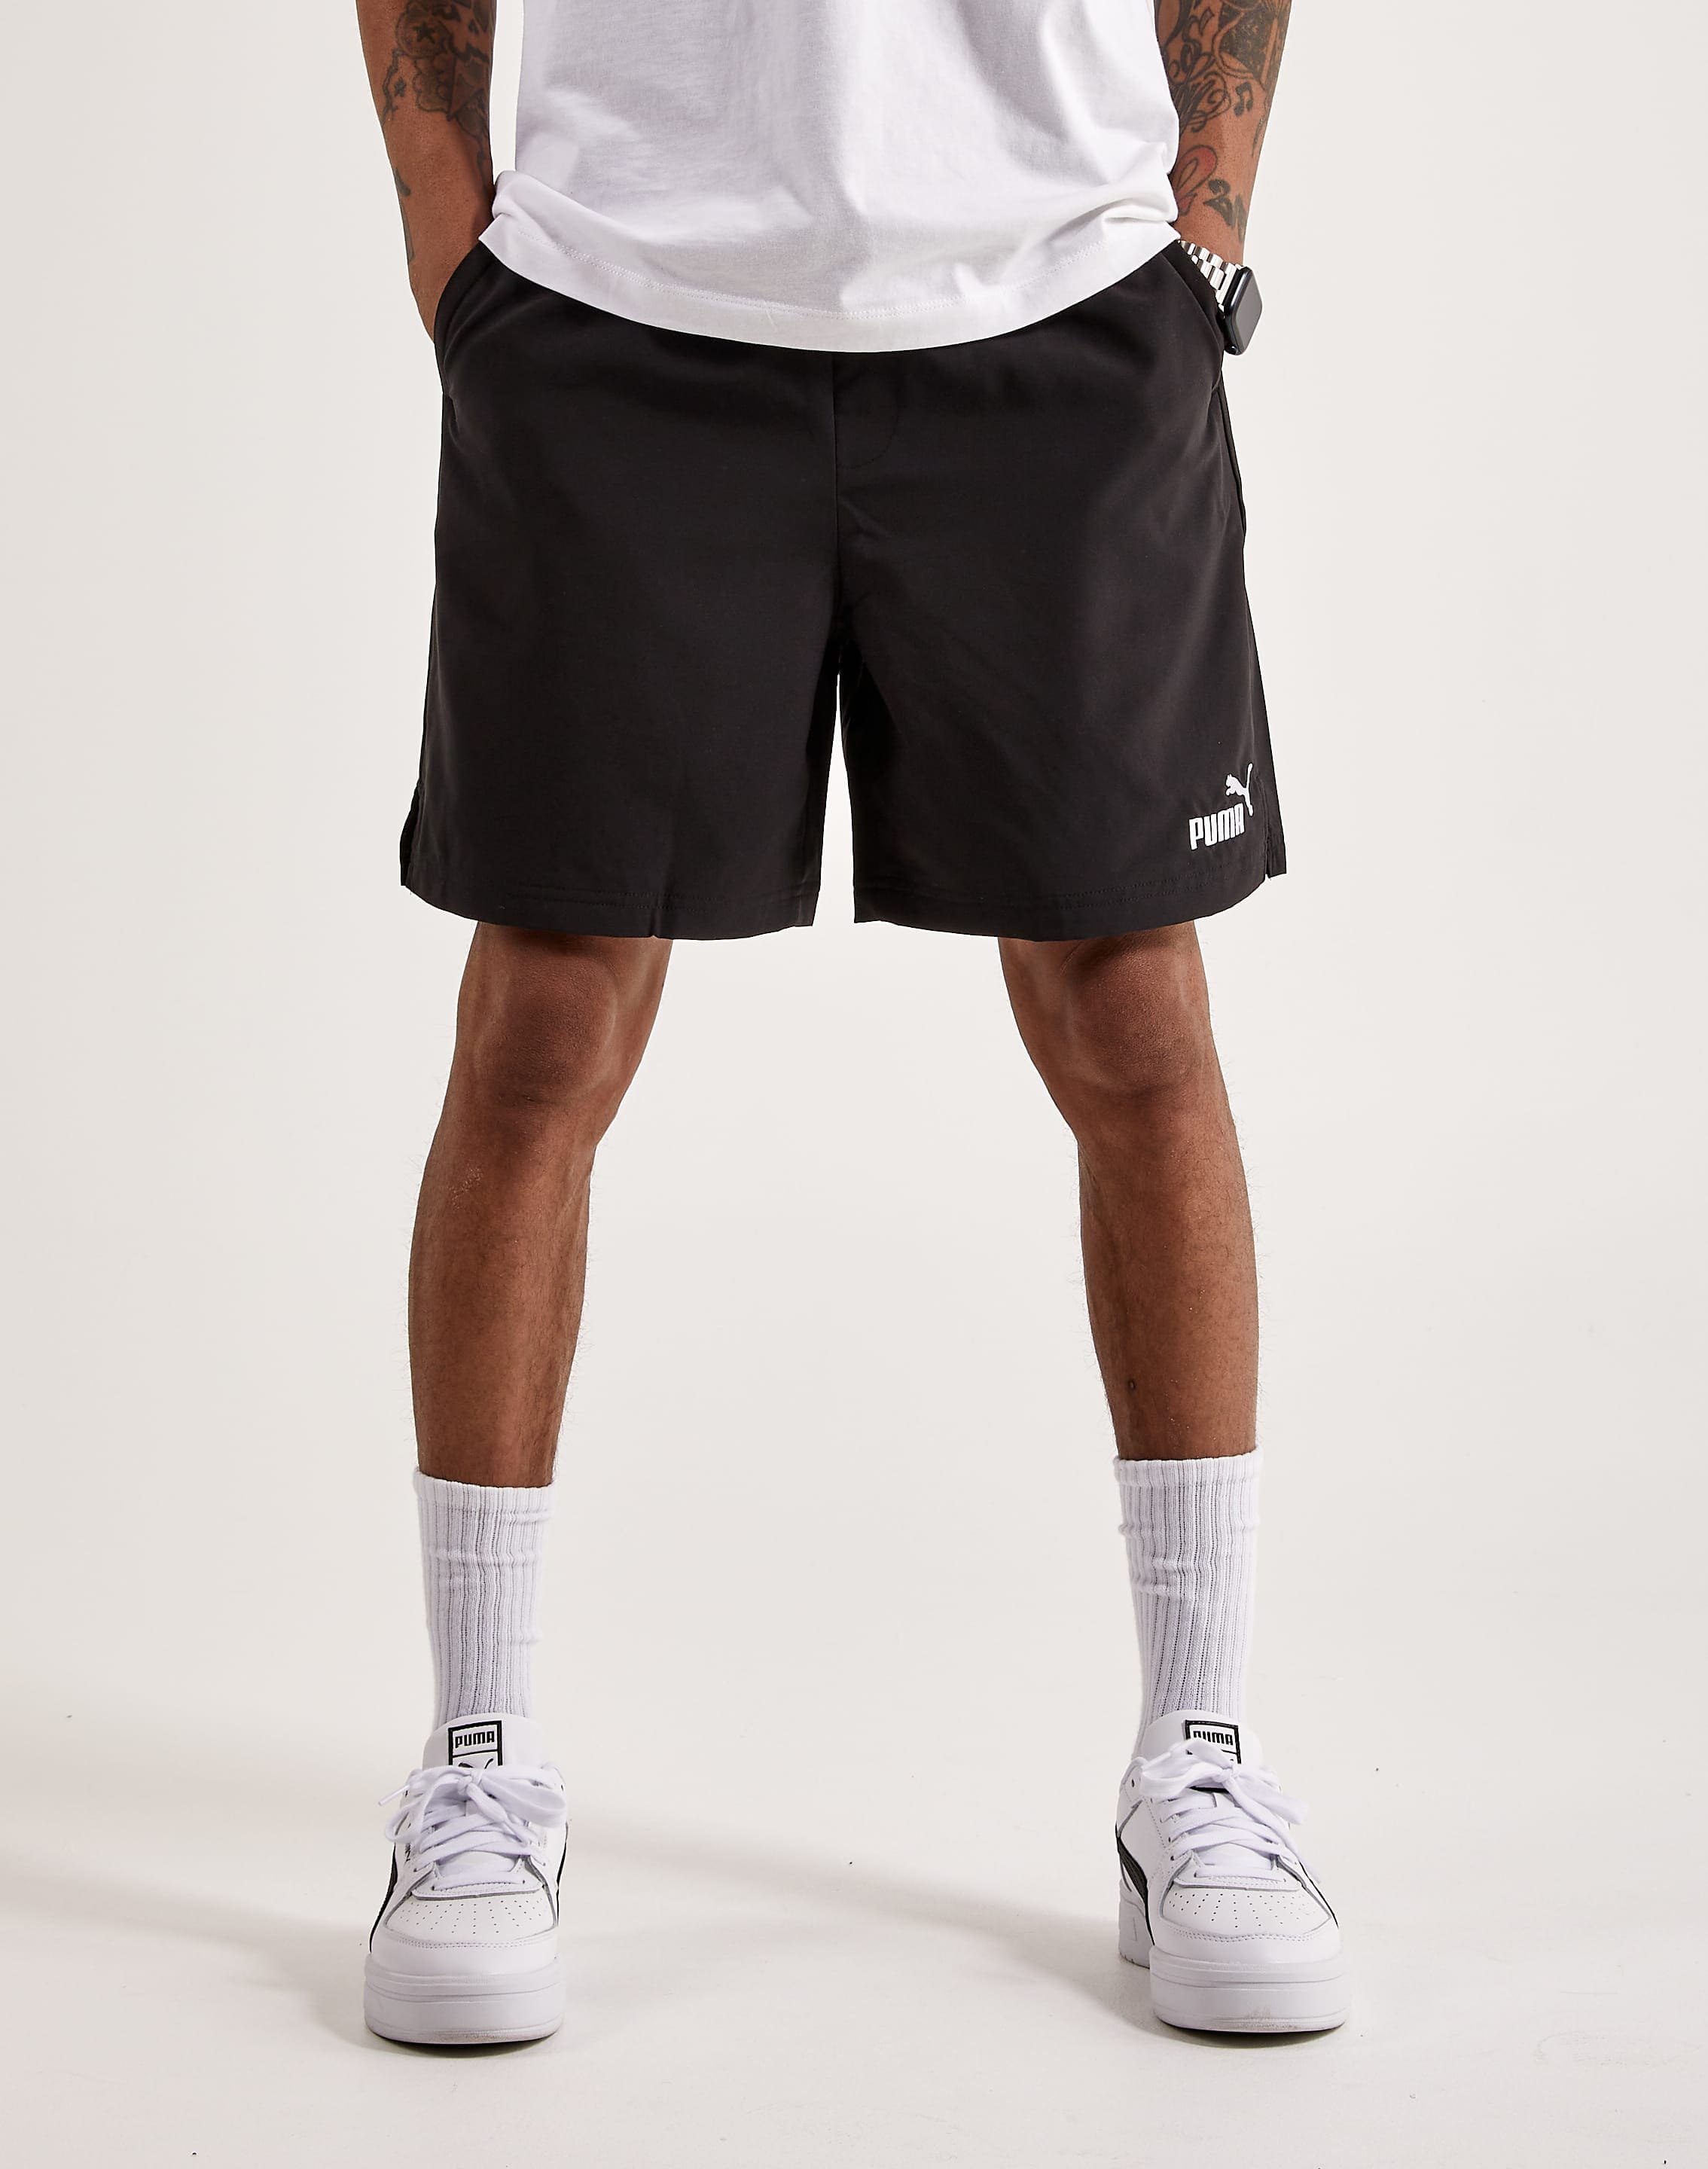 Puma essentials legging shorts in ochre